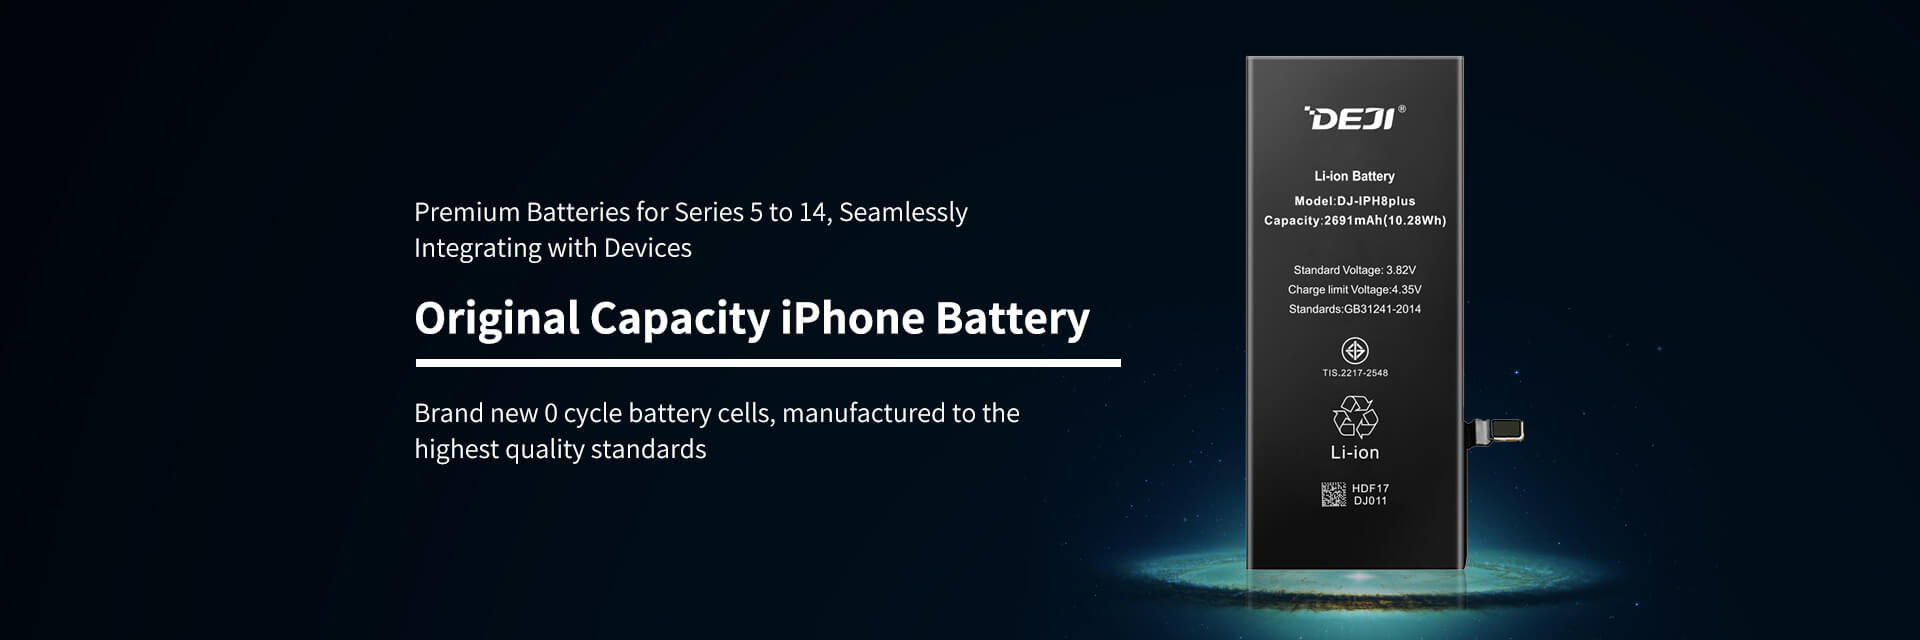 Original Capacity Iphone Battery